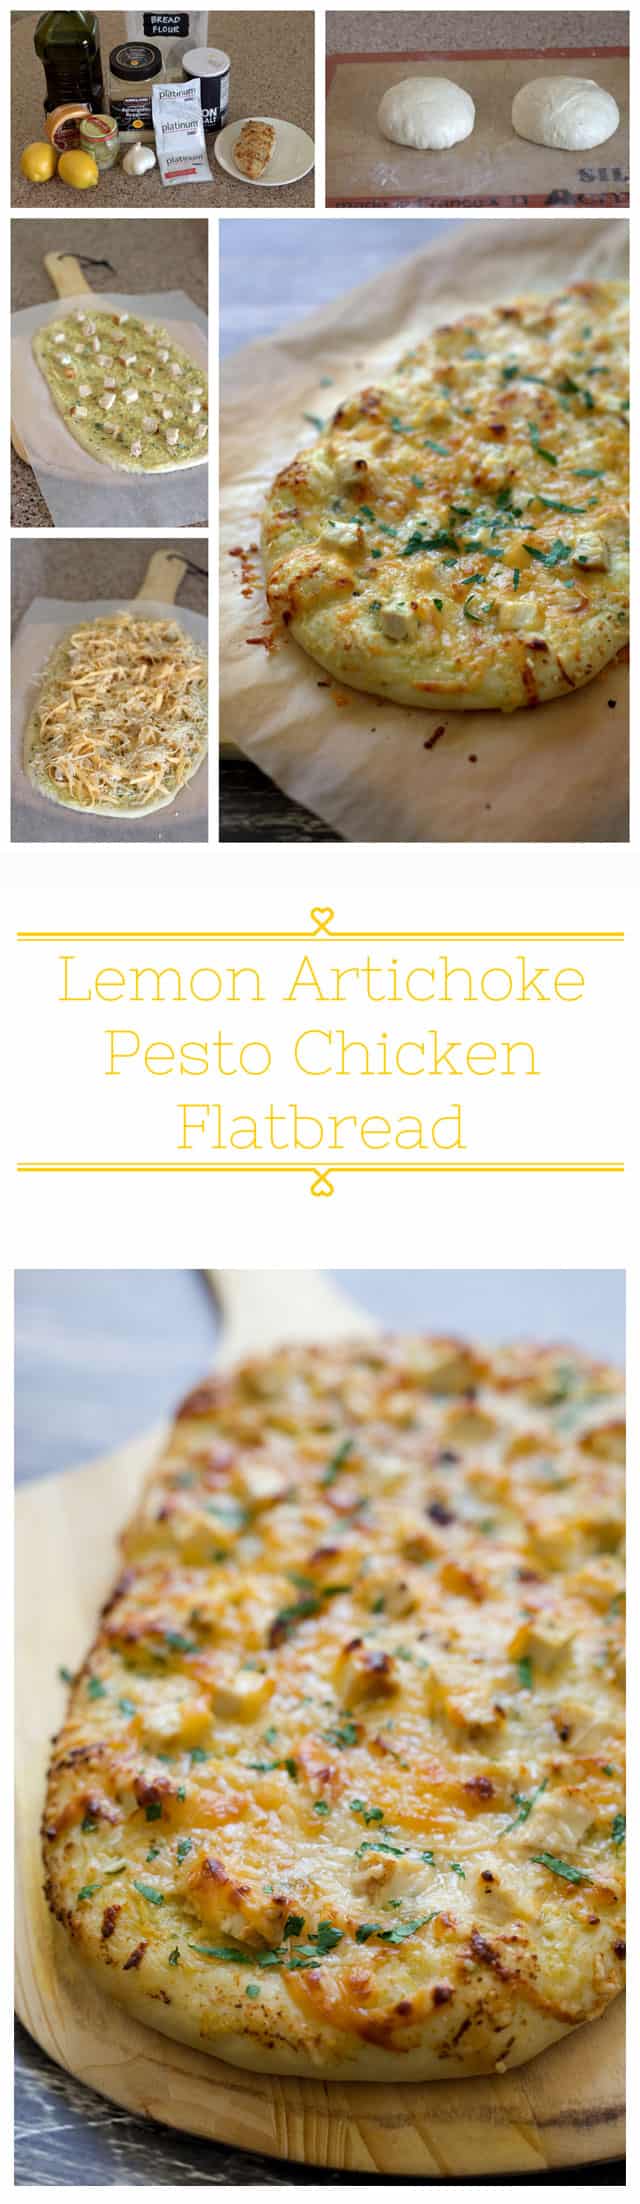 Lemon-Artichoke-Pesto-Chicken-Collage-2-Flatbread-Barbara-Bakes